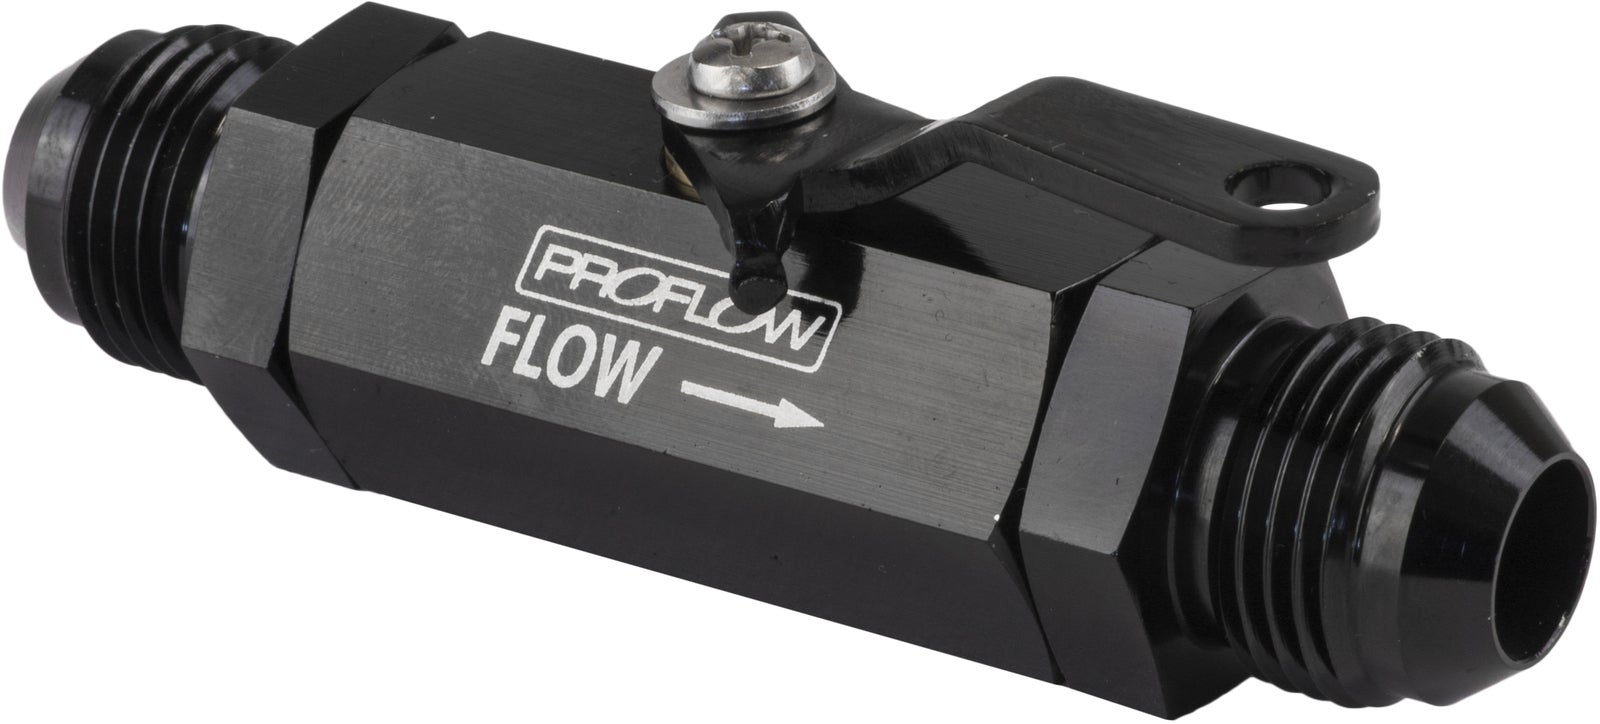 Proflow Valve Shut-Off Aluminium Black -12 AN Male Threads Each PFE1000-12B